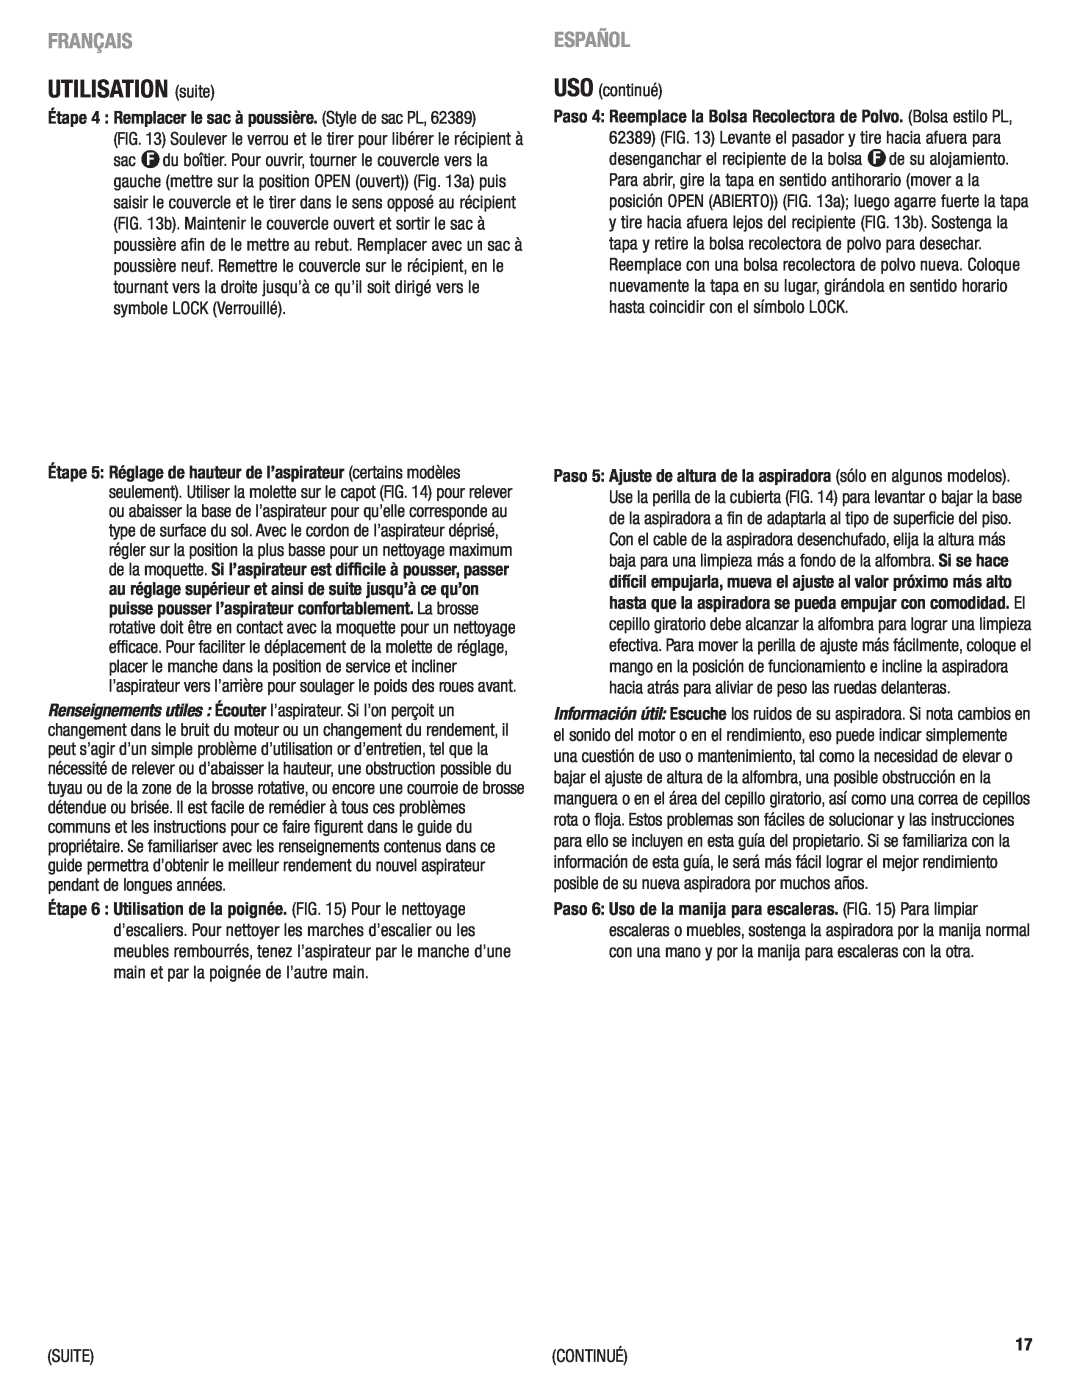 Eureka 4750 manual UTILISATION suite, Français, Español, USO continué, Suite 